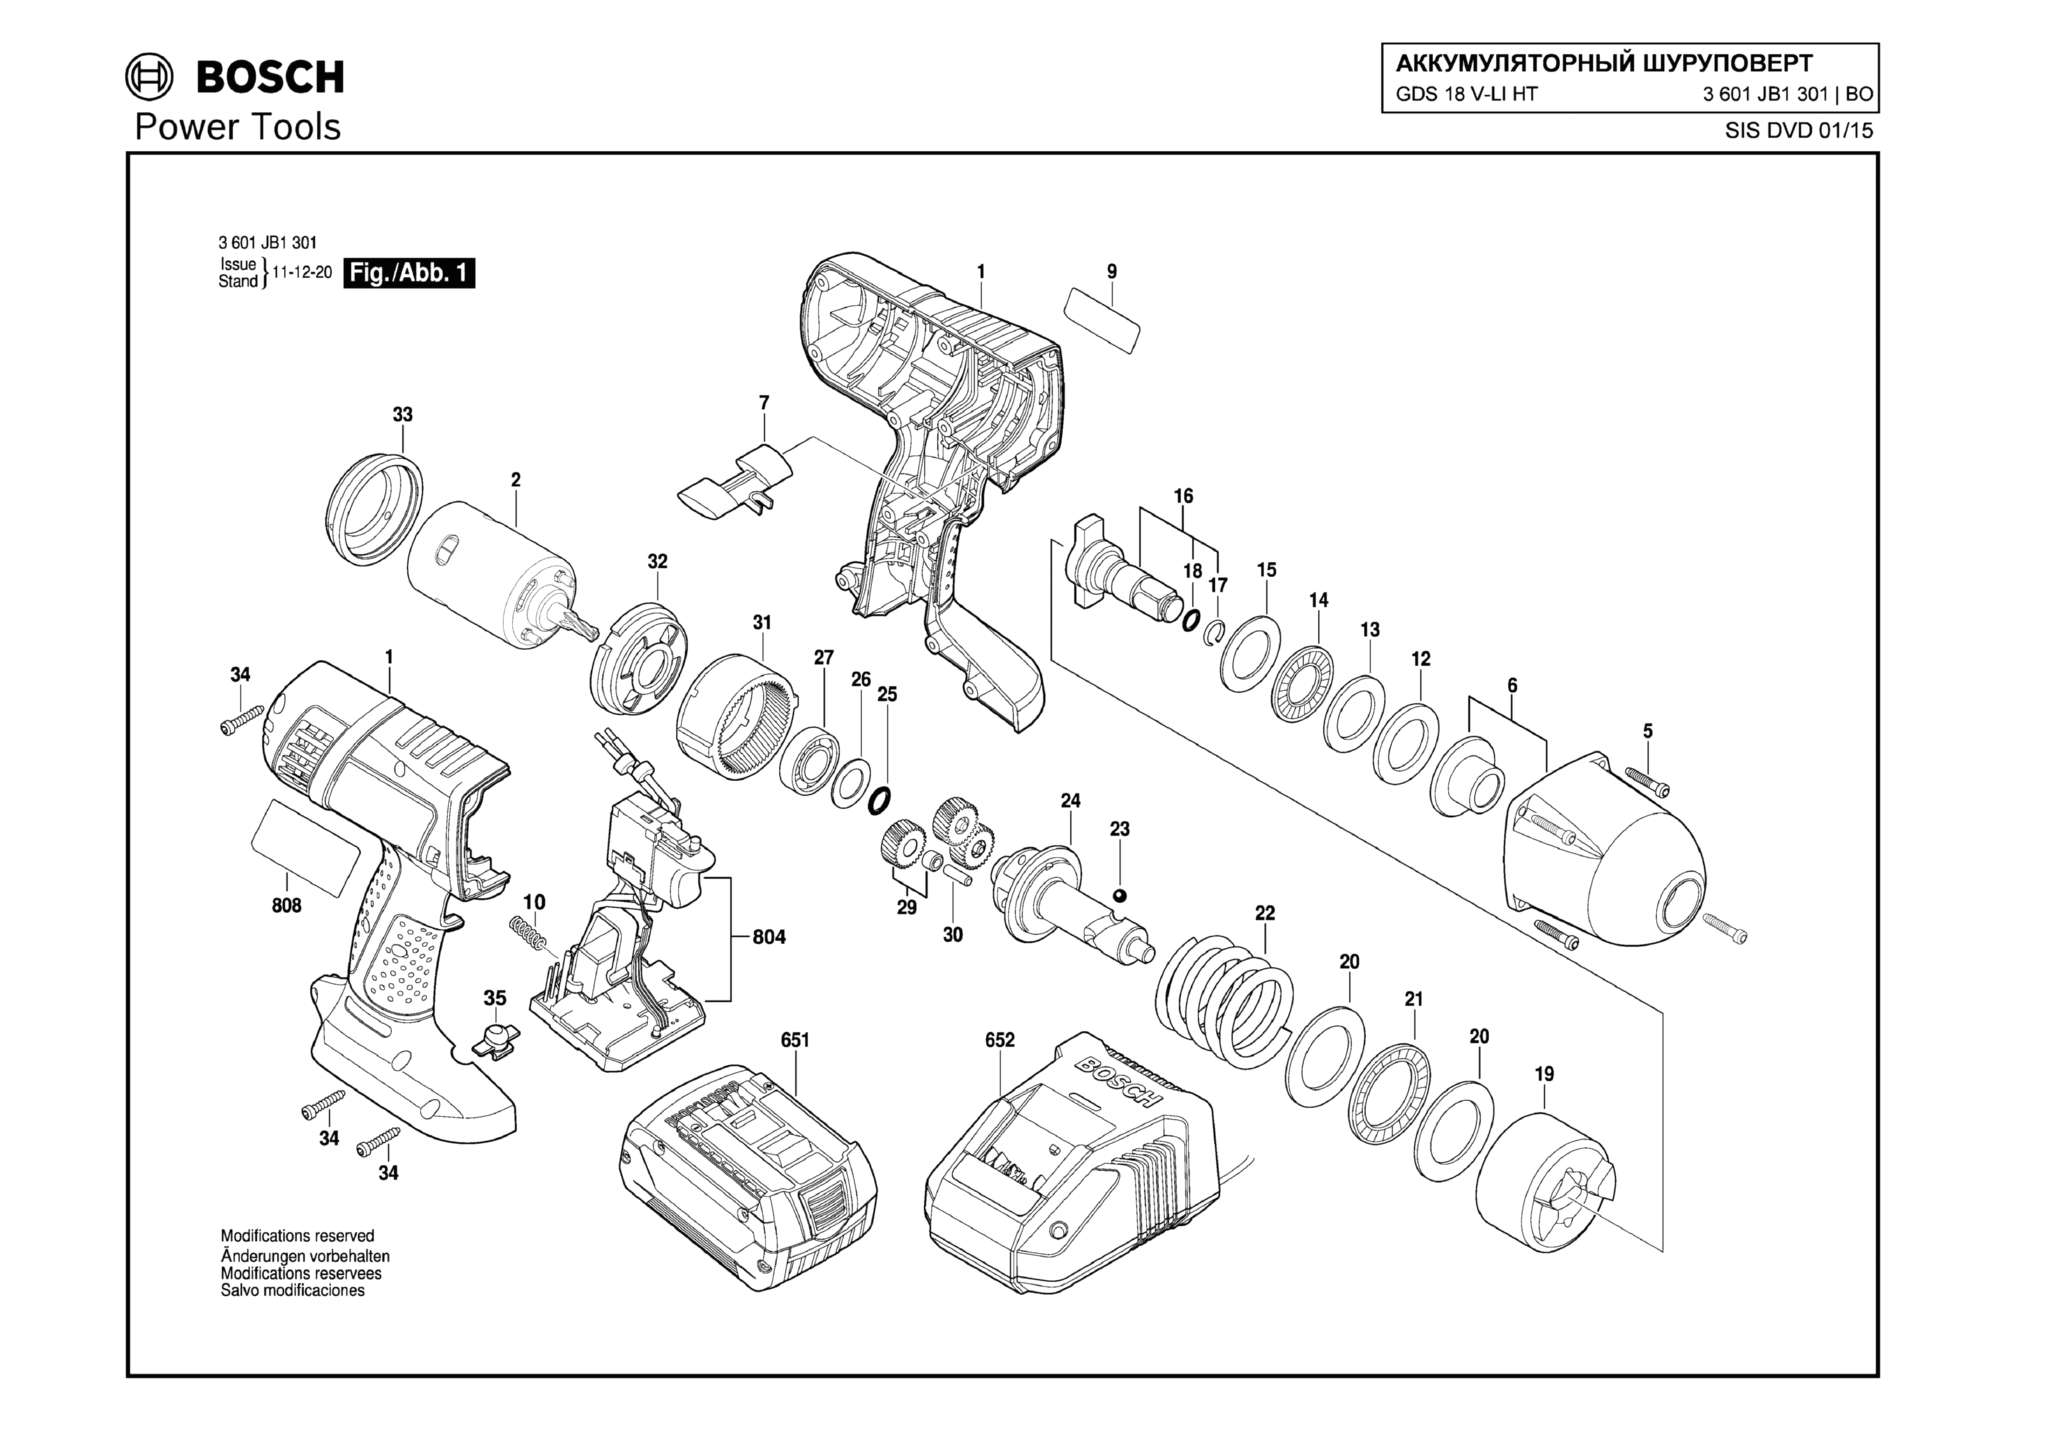 Запчасти, схема и деталировка Bosch GDS 18 V-LI HT (ТИП 3601JB1301)